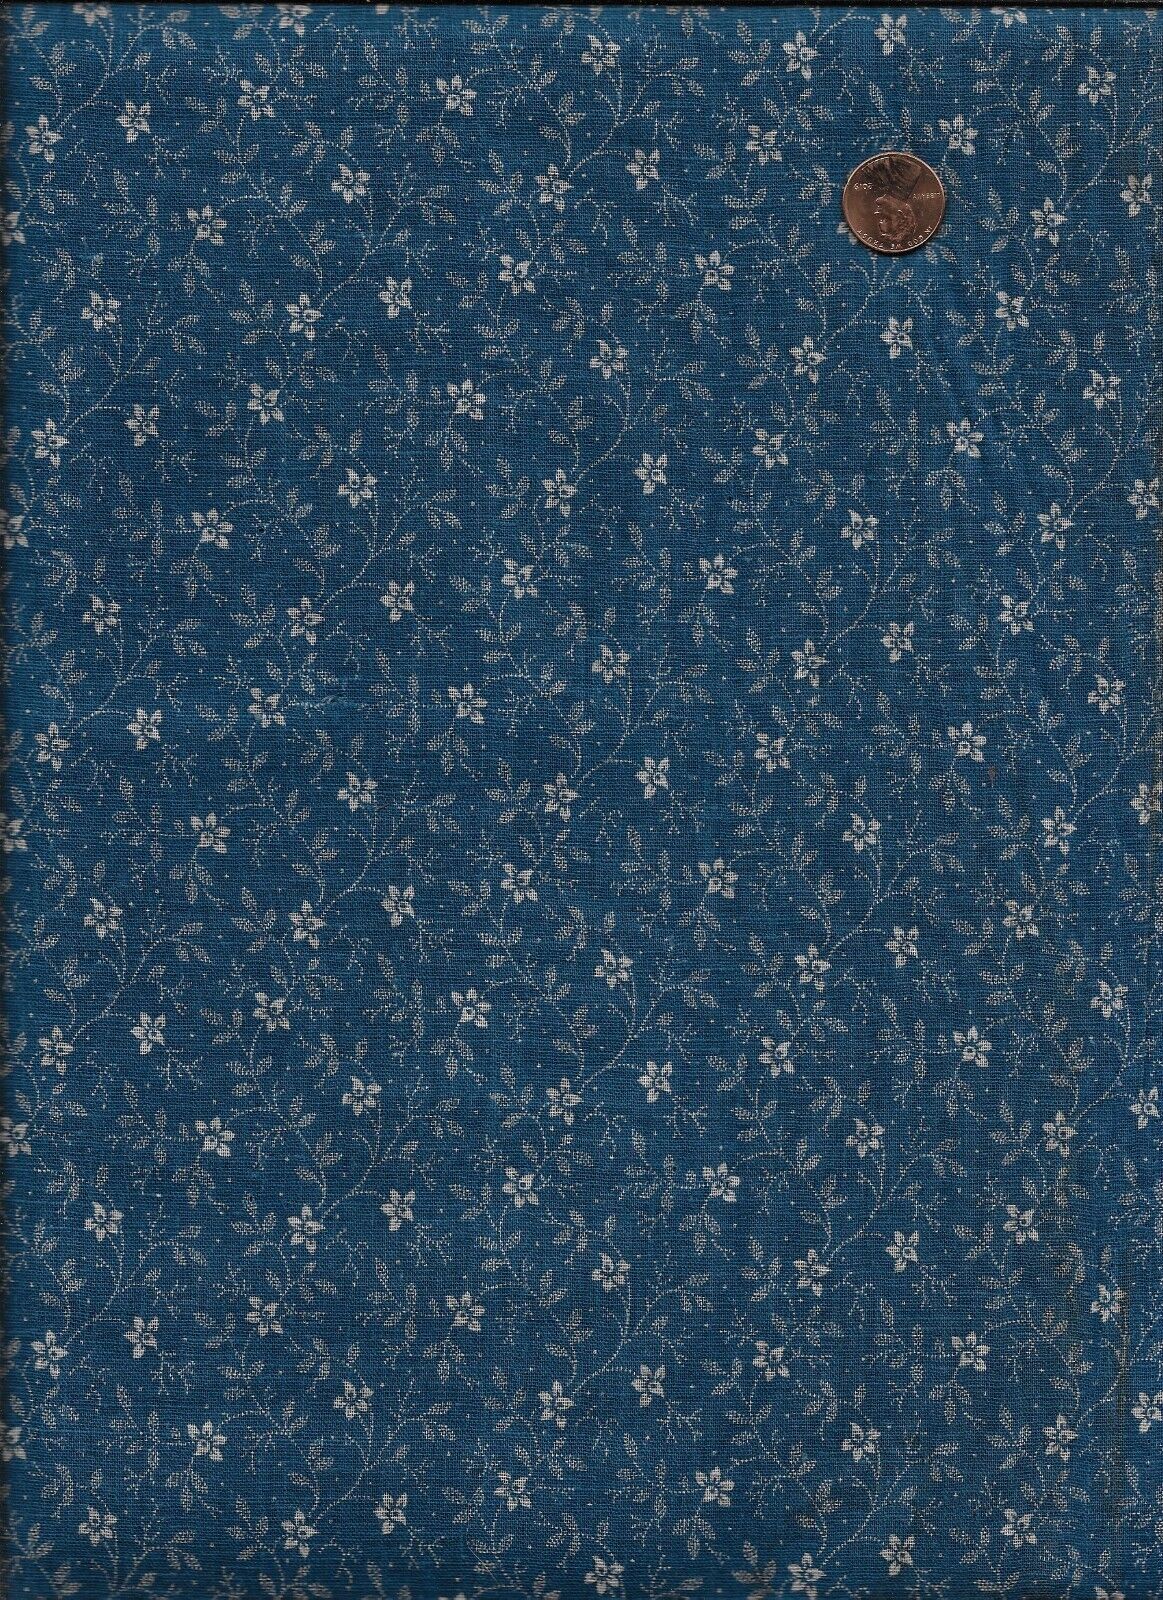 Antique 1870 French Floral Indigo Blue Fabric